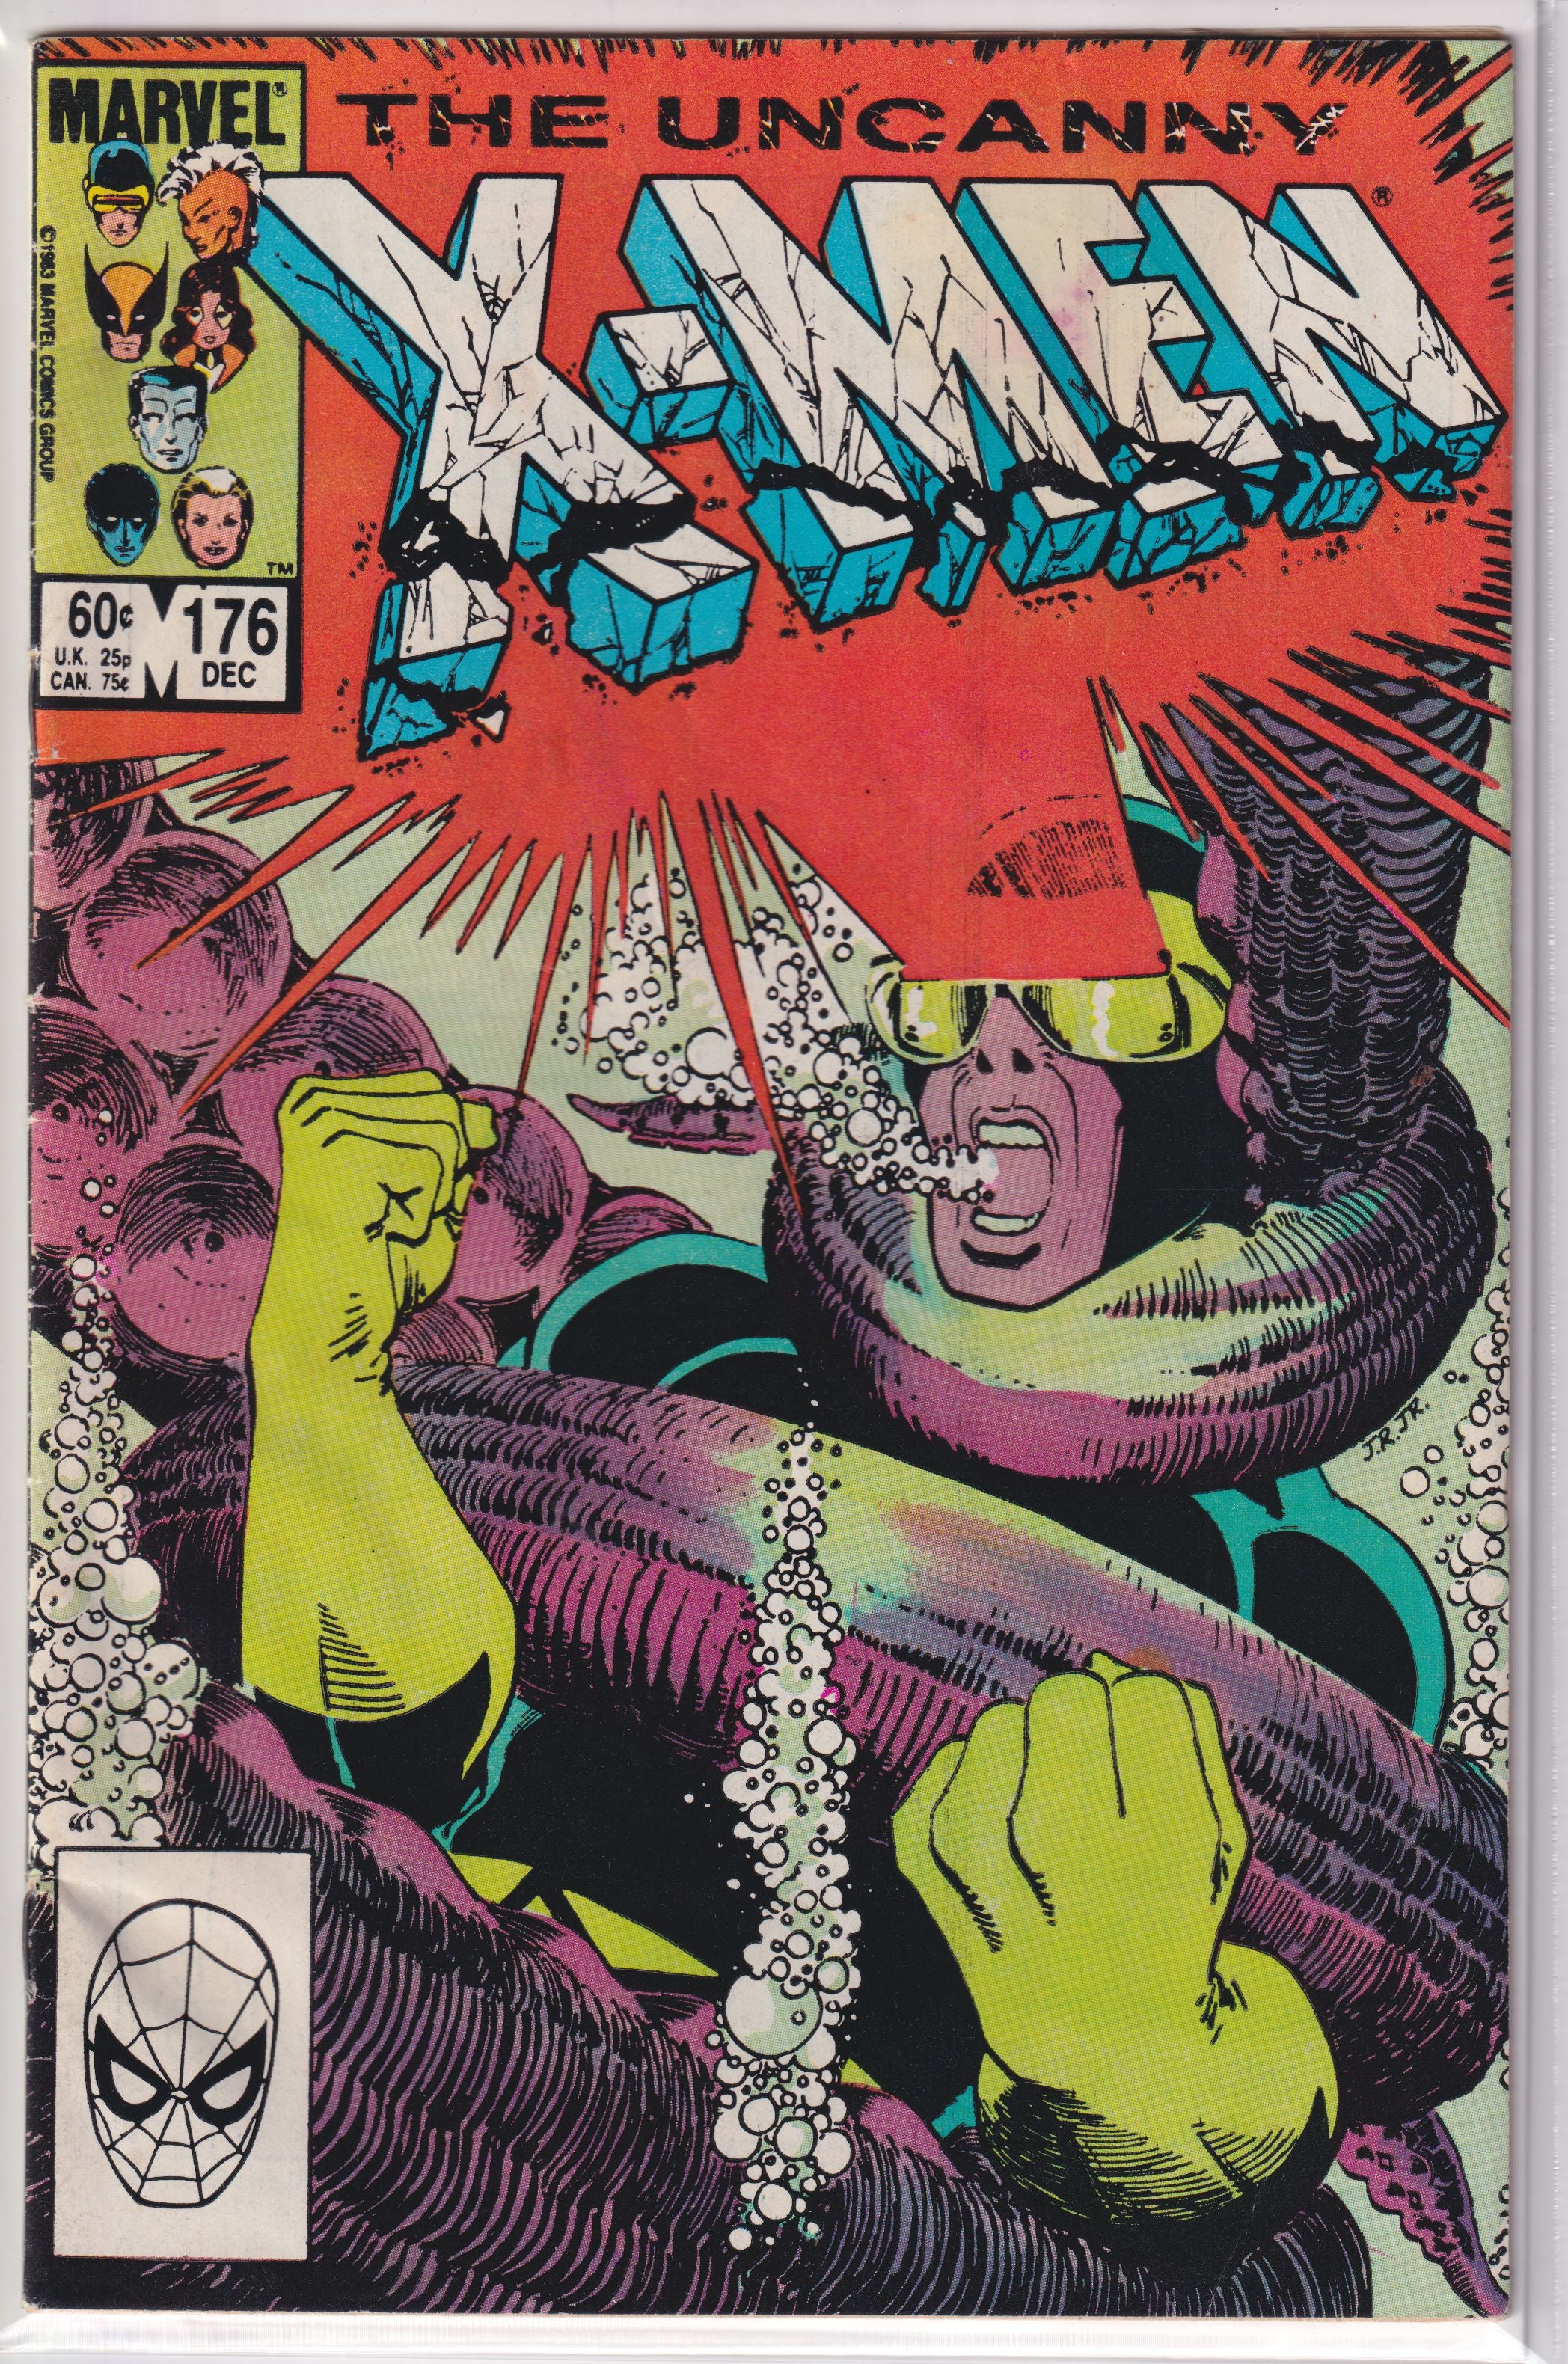 UNCANNY X-MEN (1981) #176 VG+